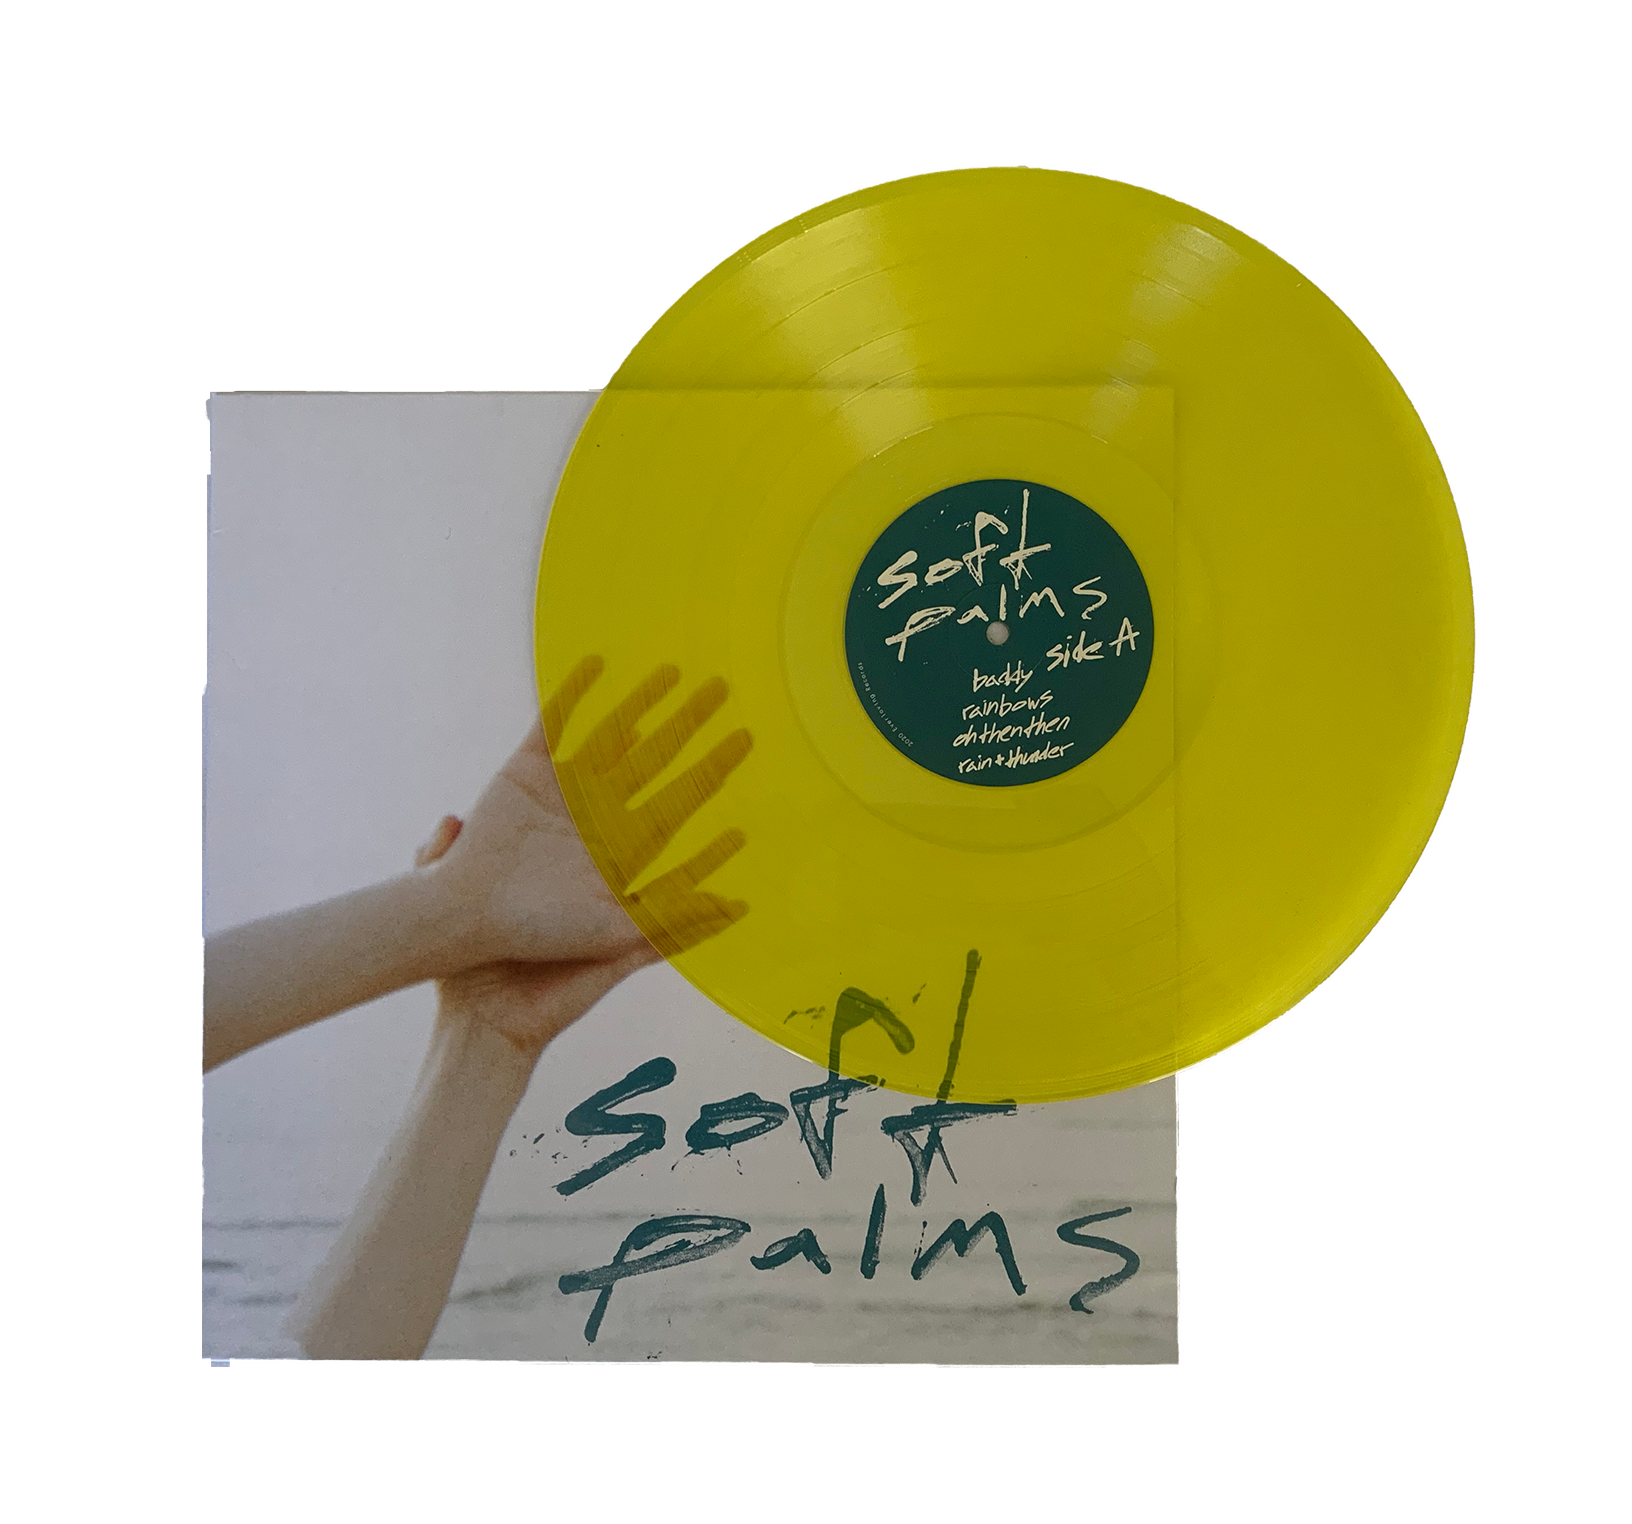 Soft Palms - ltd. edition yellow vinyl LP